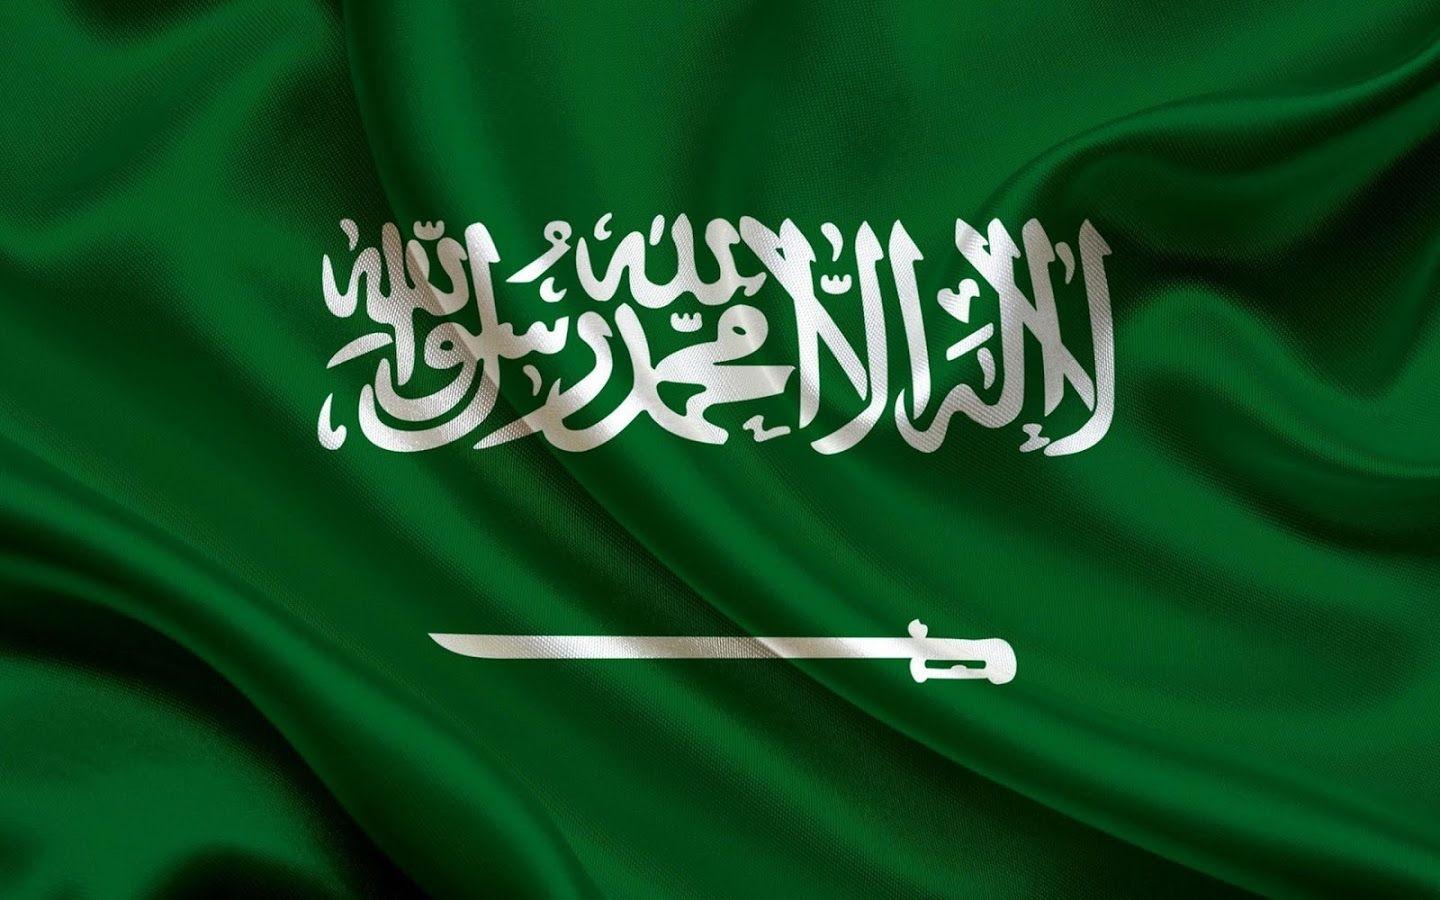 Saudi Arabia Flag Wallpaper Apps on Google Play